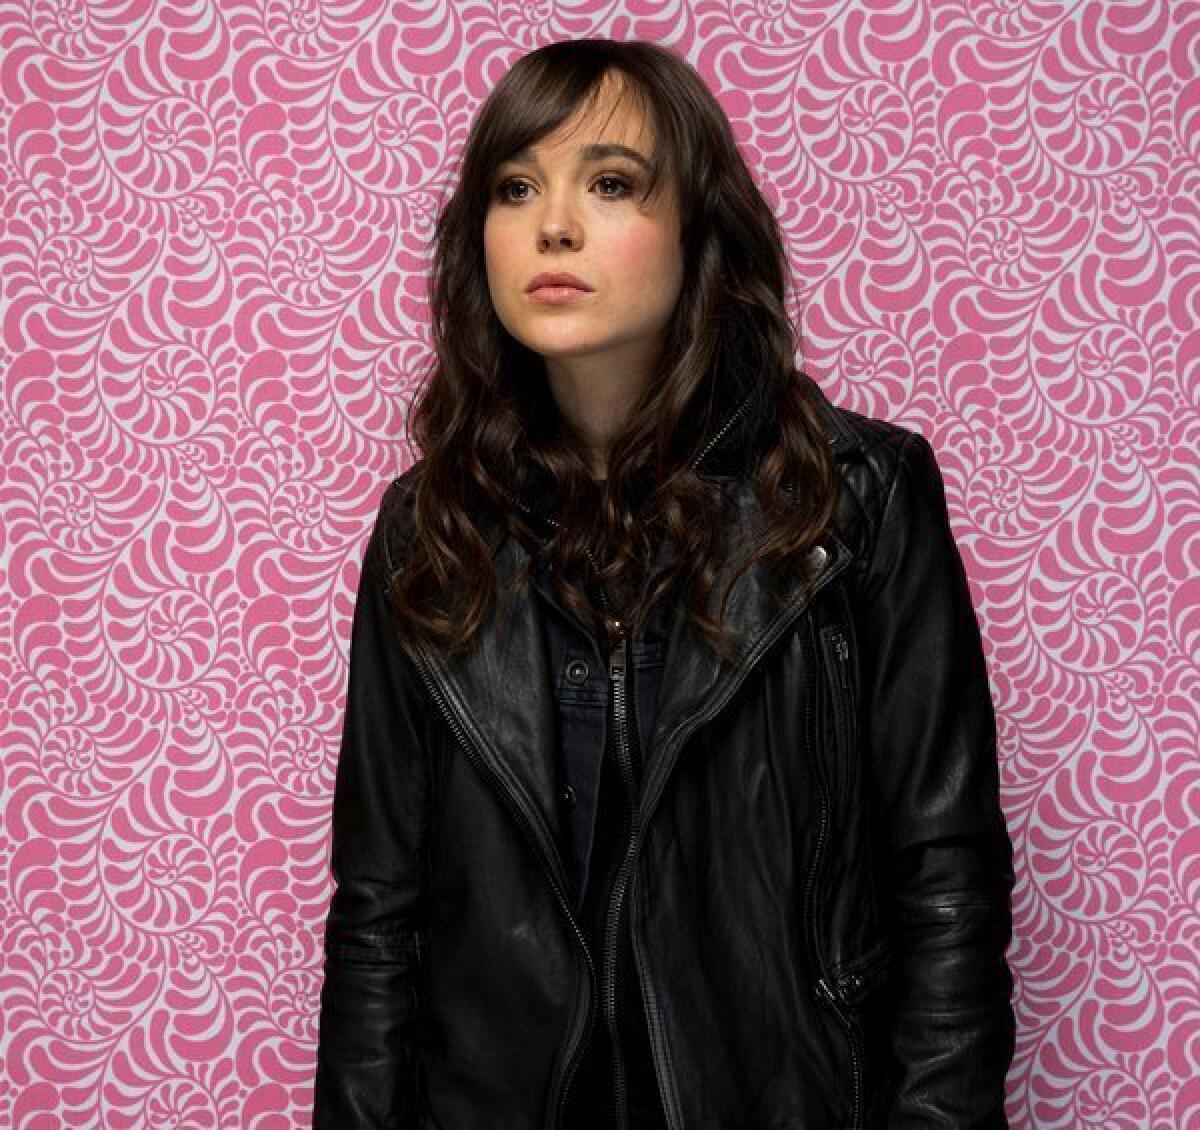 Ellen Page at the 2013 Sundance Film Festival.